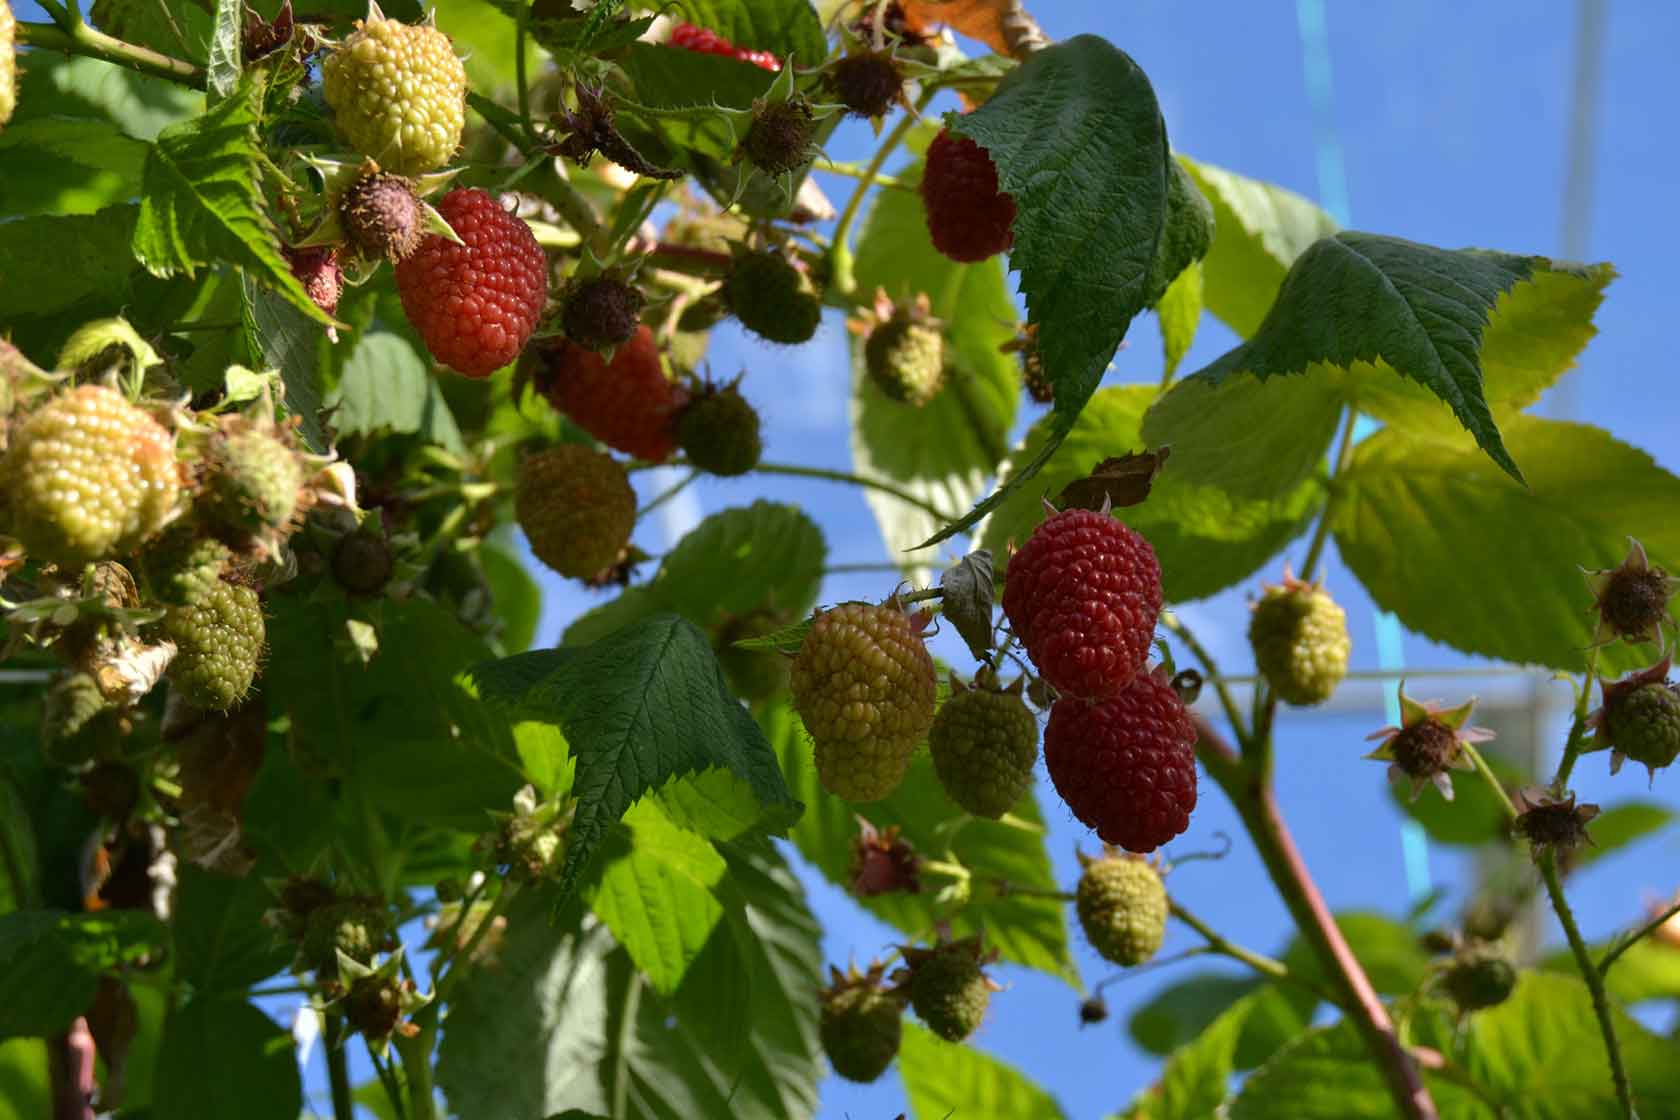 raspberries hydroponic tancredi